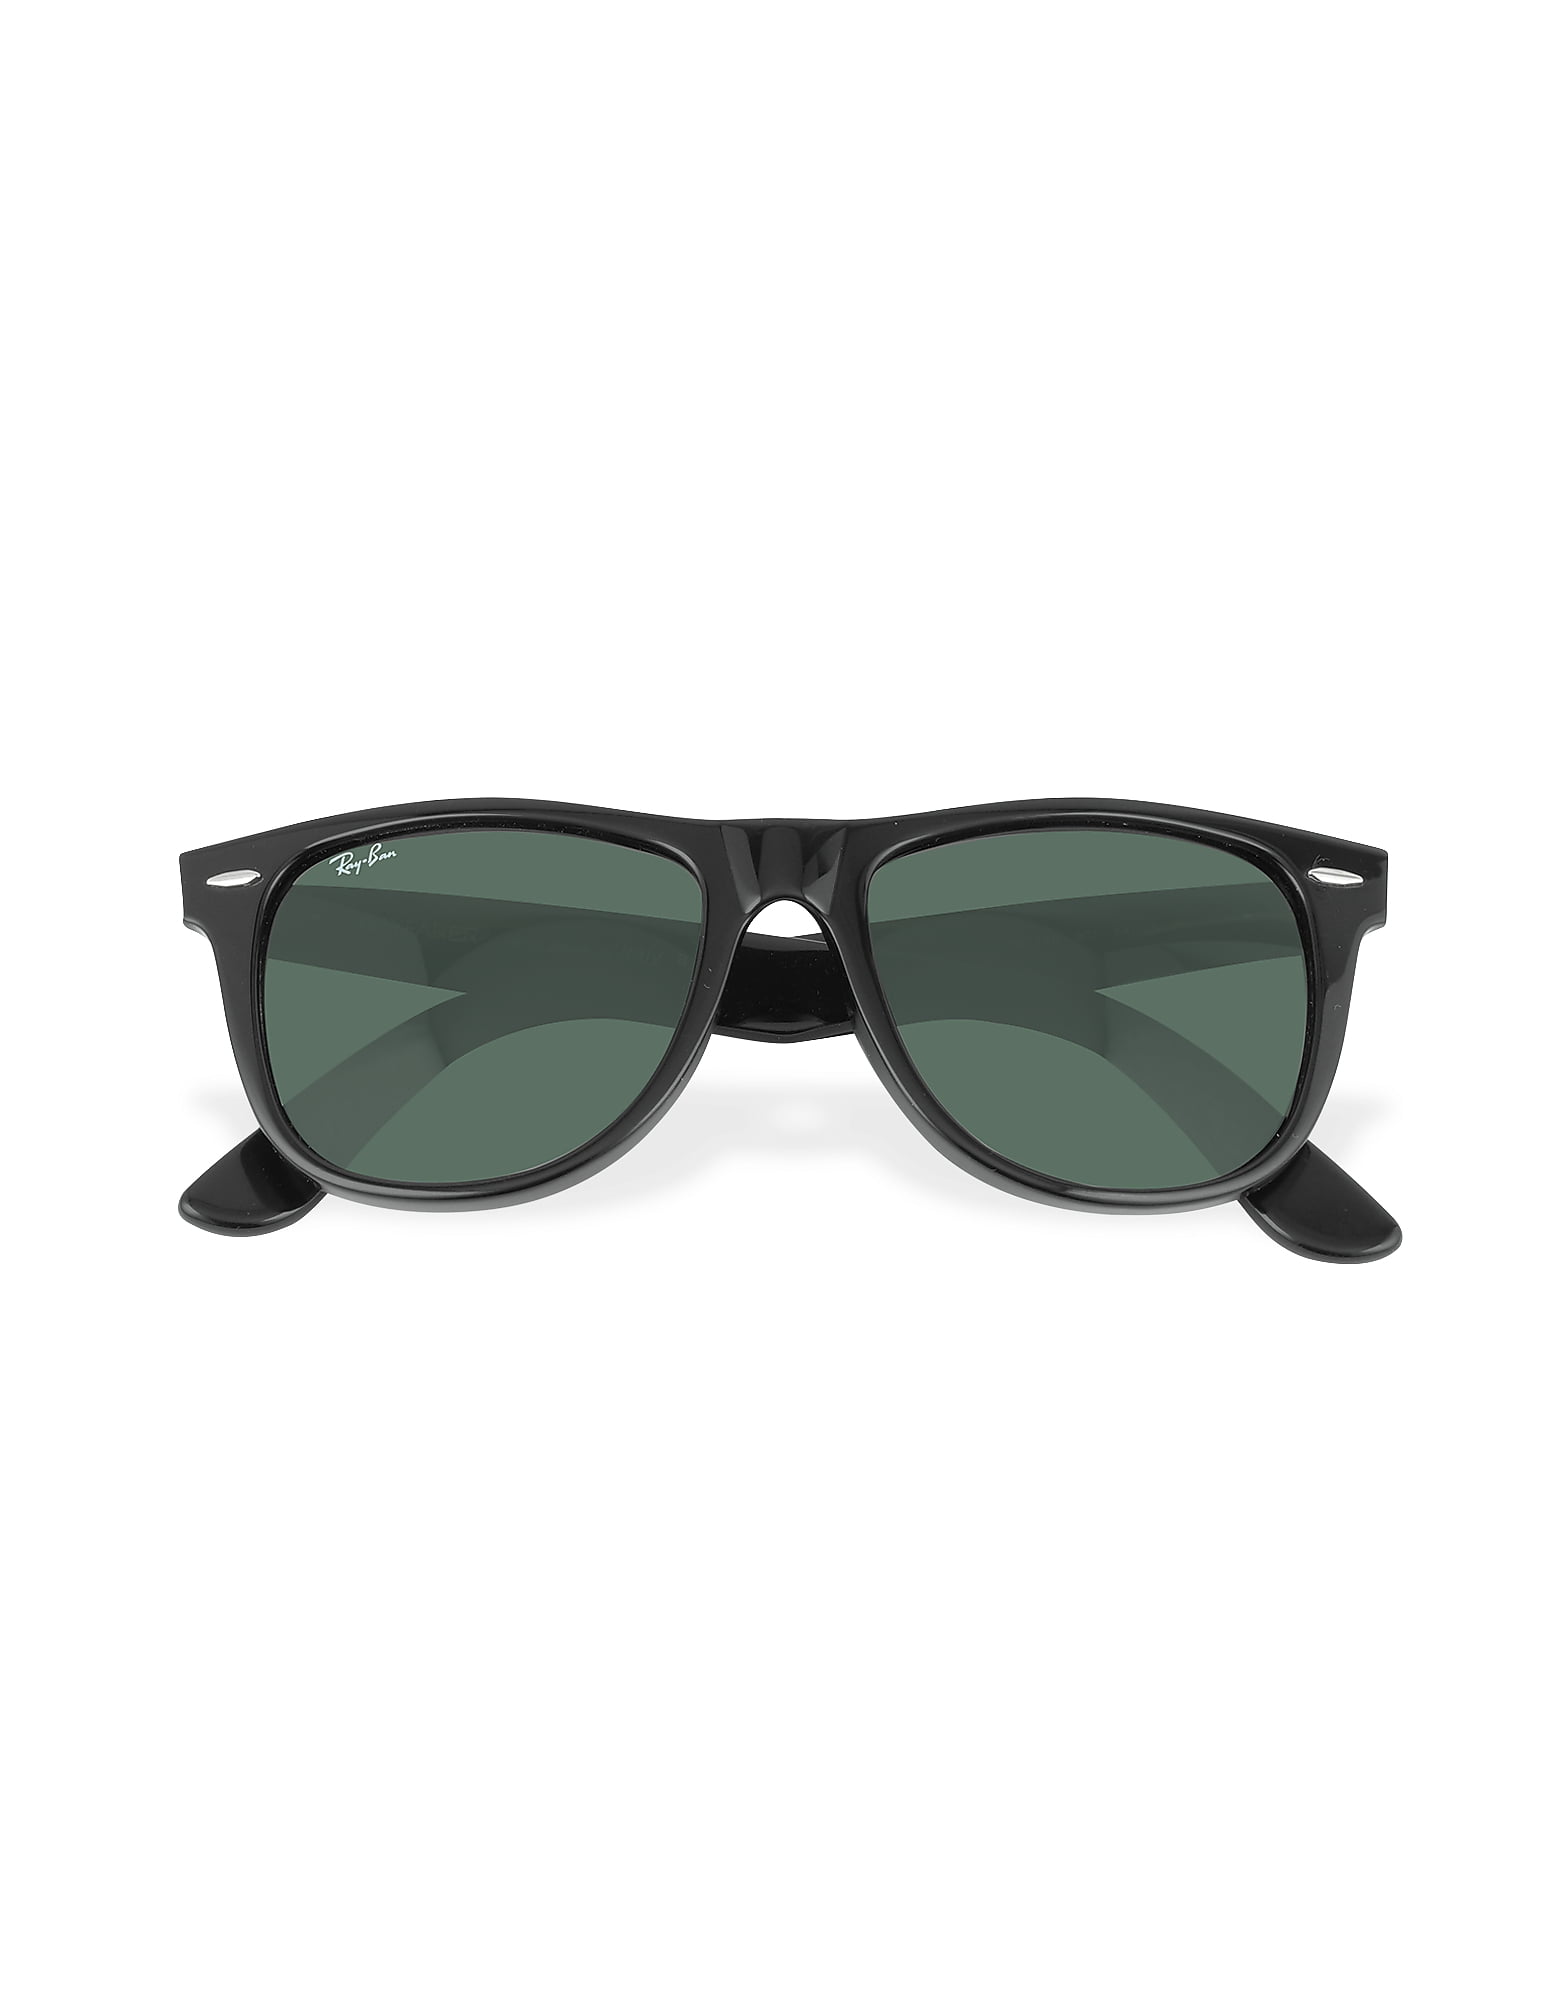 Ray Ban Designer Sunglasses, Original Wayfarer - Square Acetate Sunglasses  